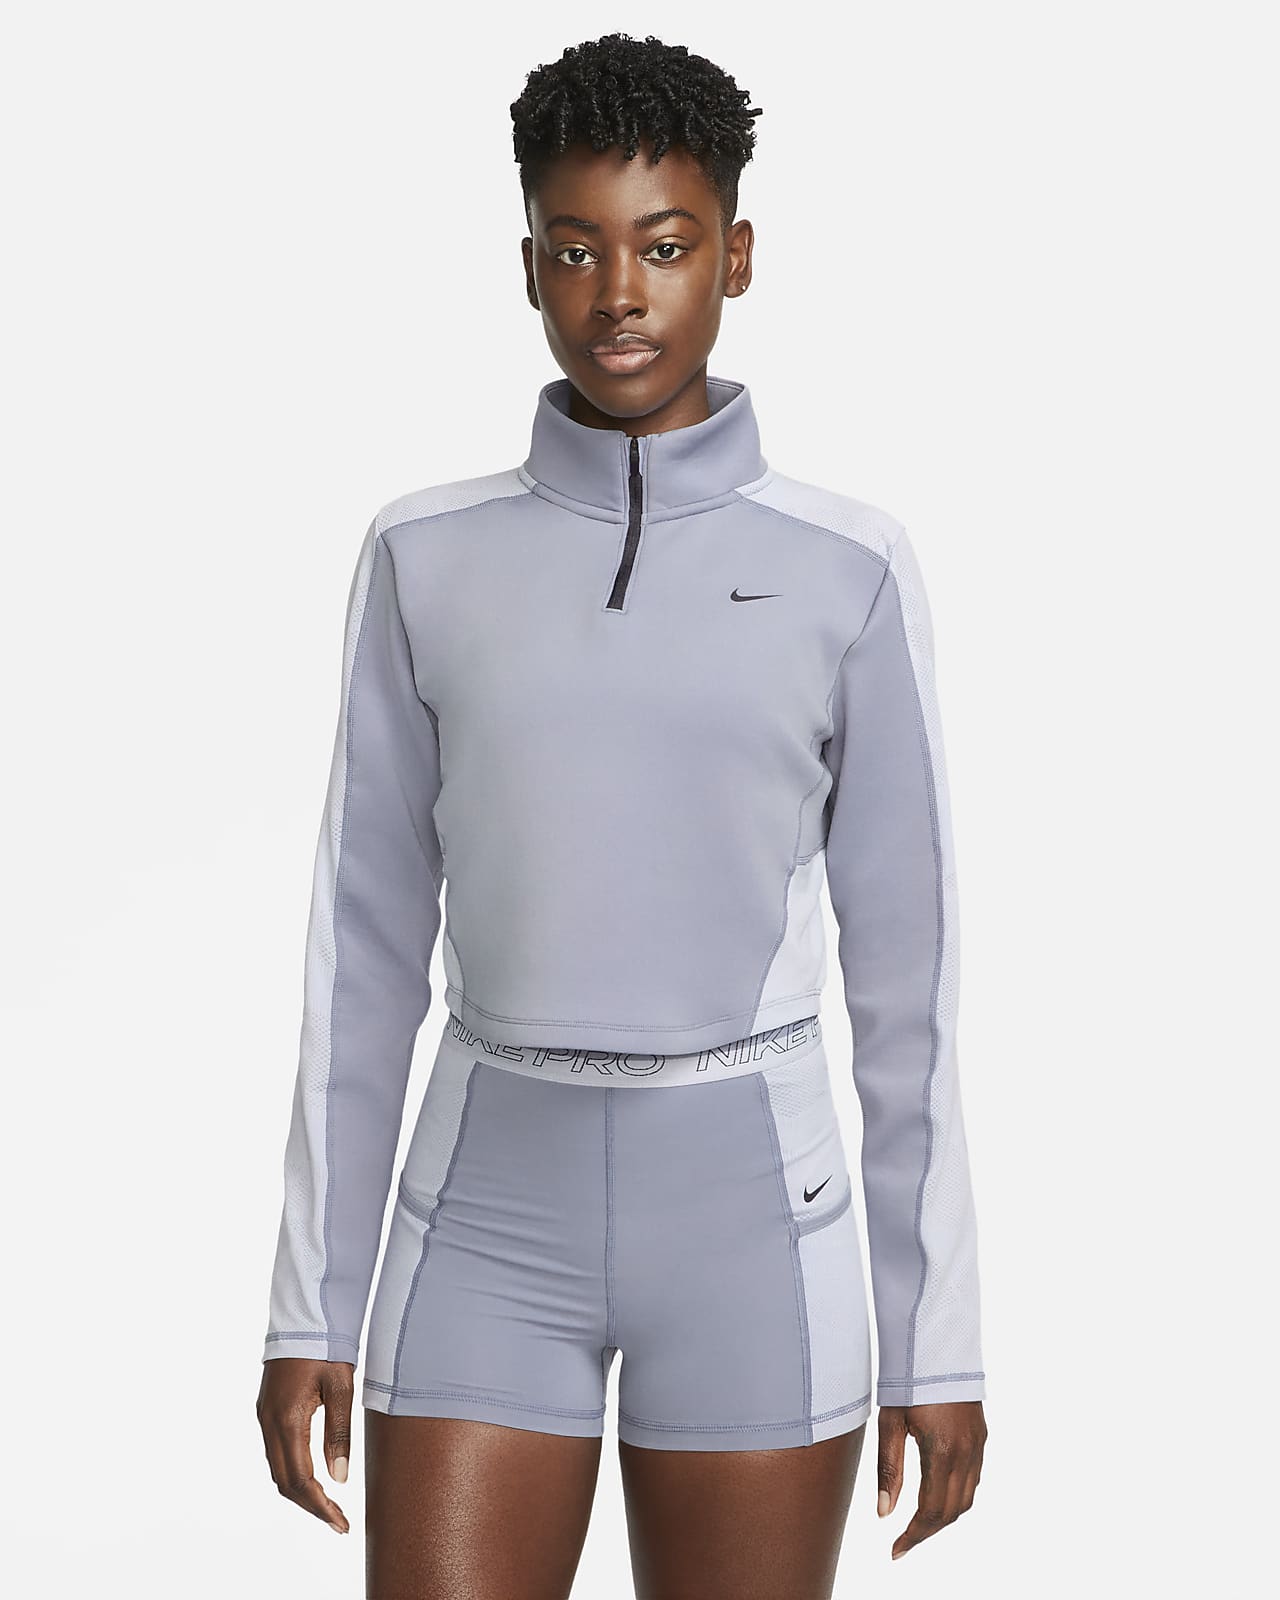 Nike Dri-FIT Ready 1/4-Zip Fitness Top - Men's 